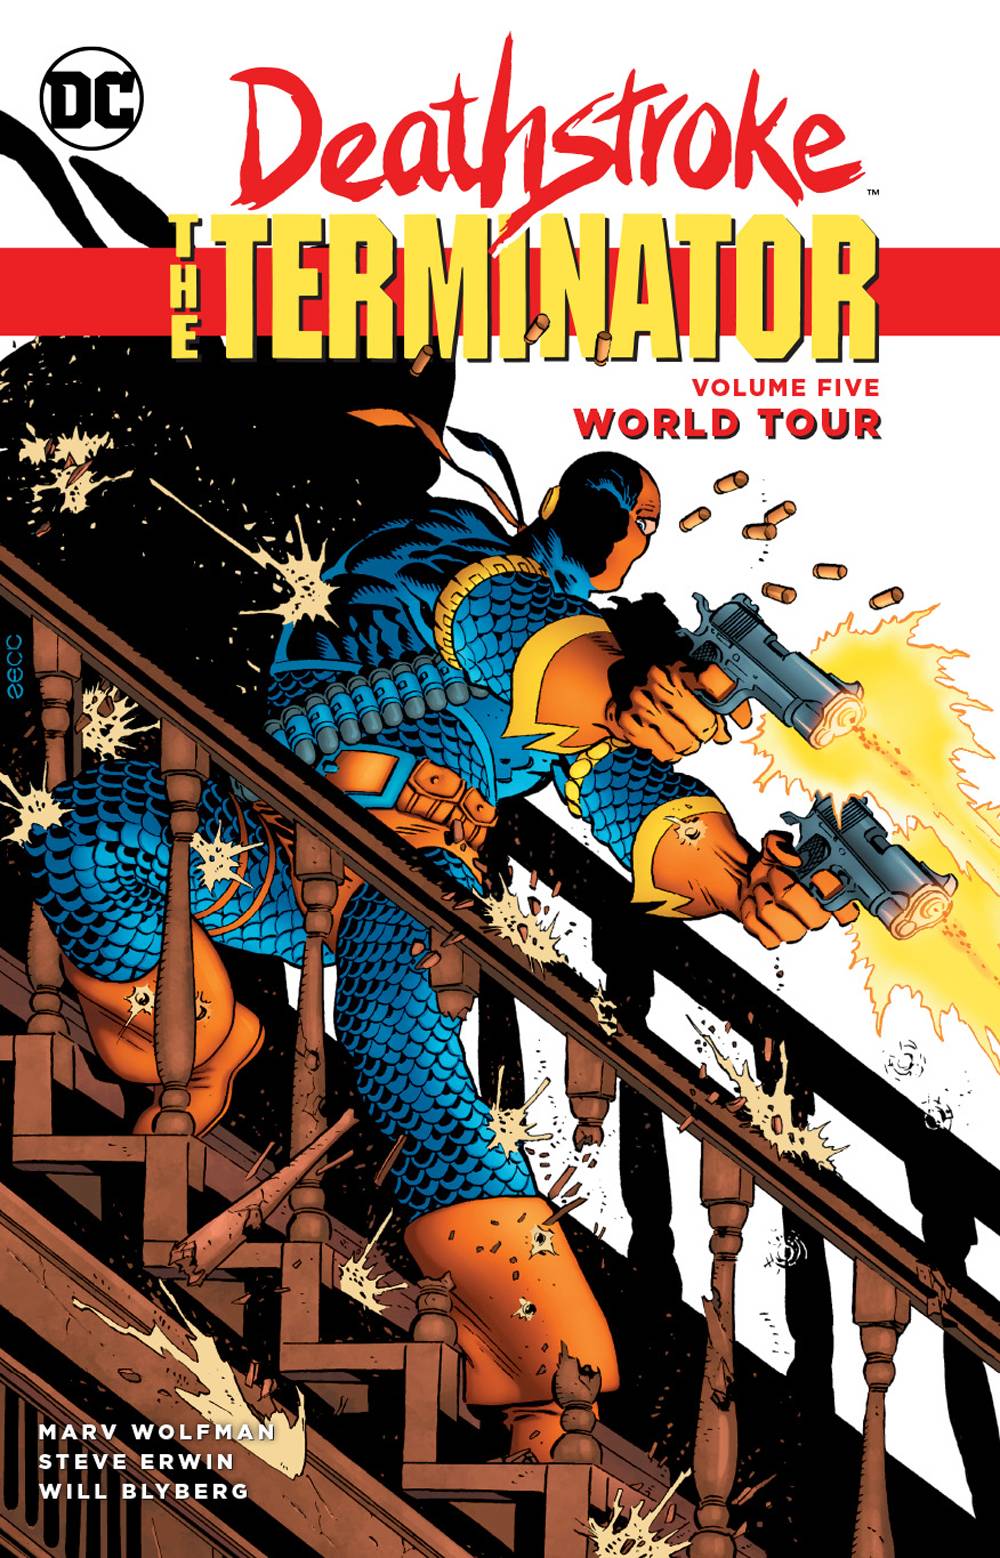 Deathstroke The Terminator Graphic Novel Volume 5 World Tour